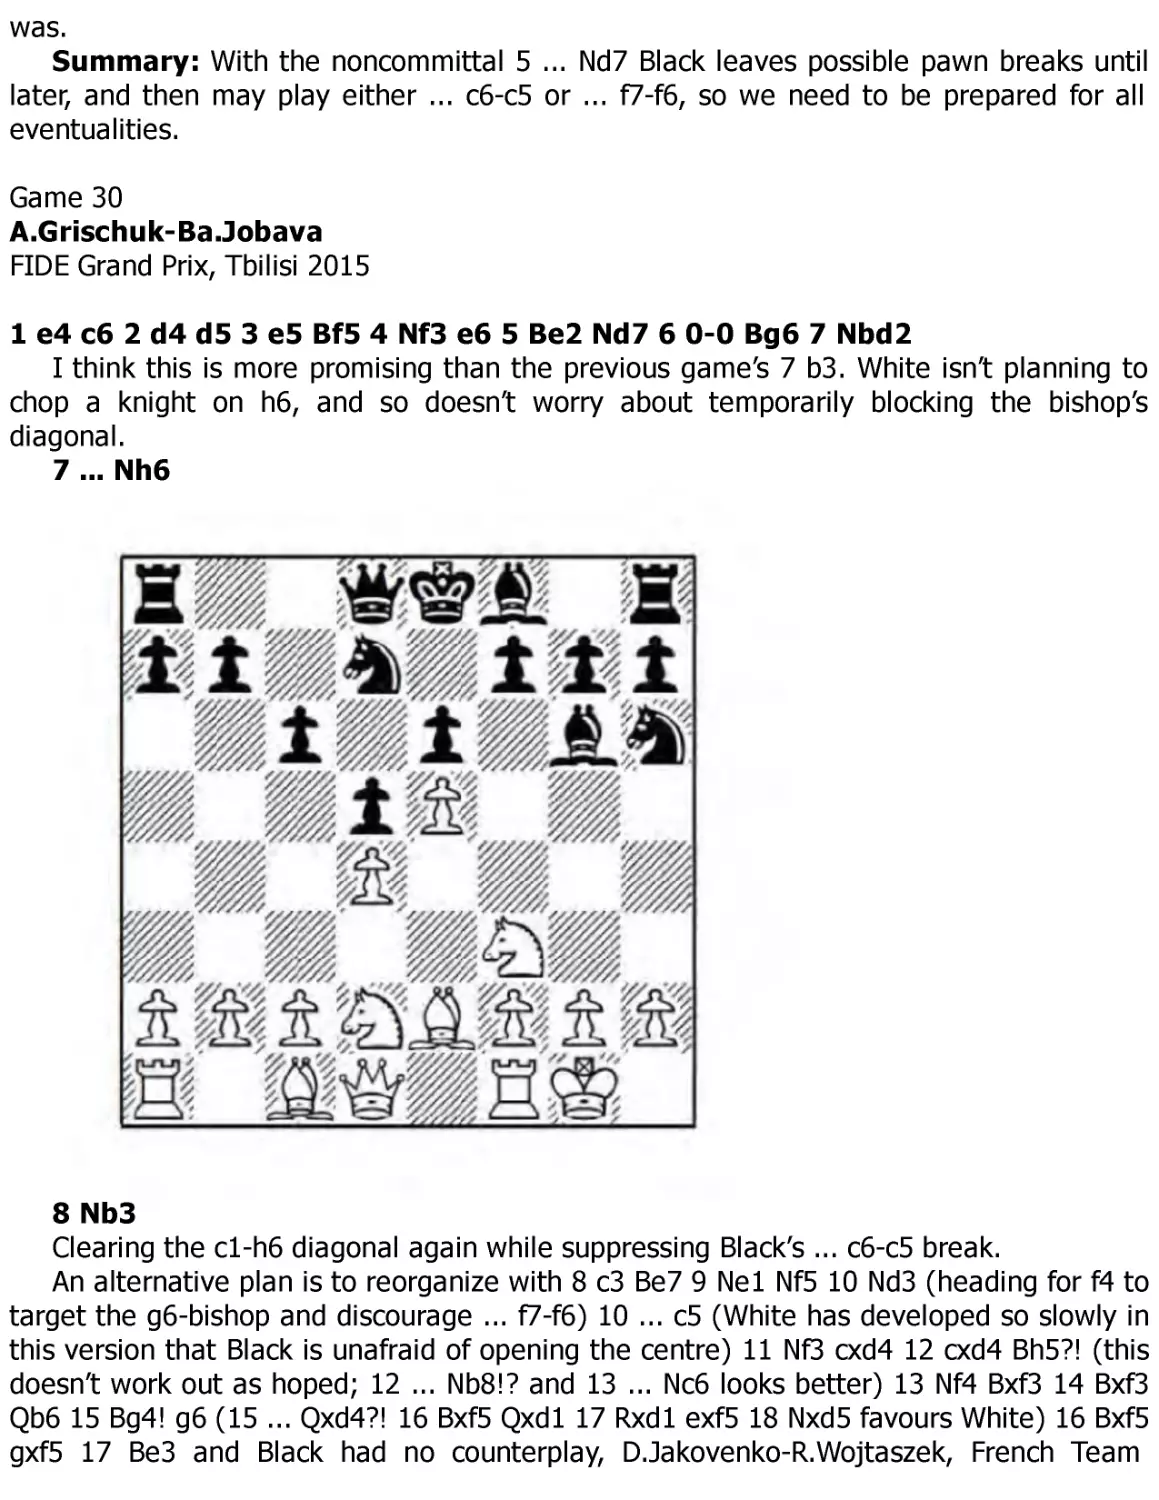 ﻿Grischuk.A-Jobava.B, FIDE Grand Prix, Tbilisi 201